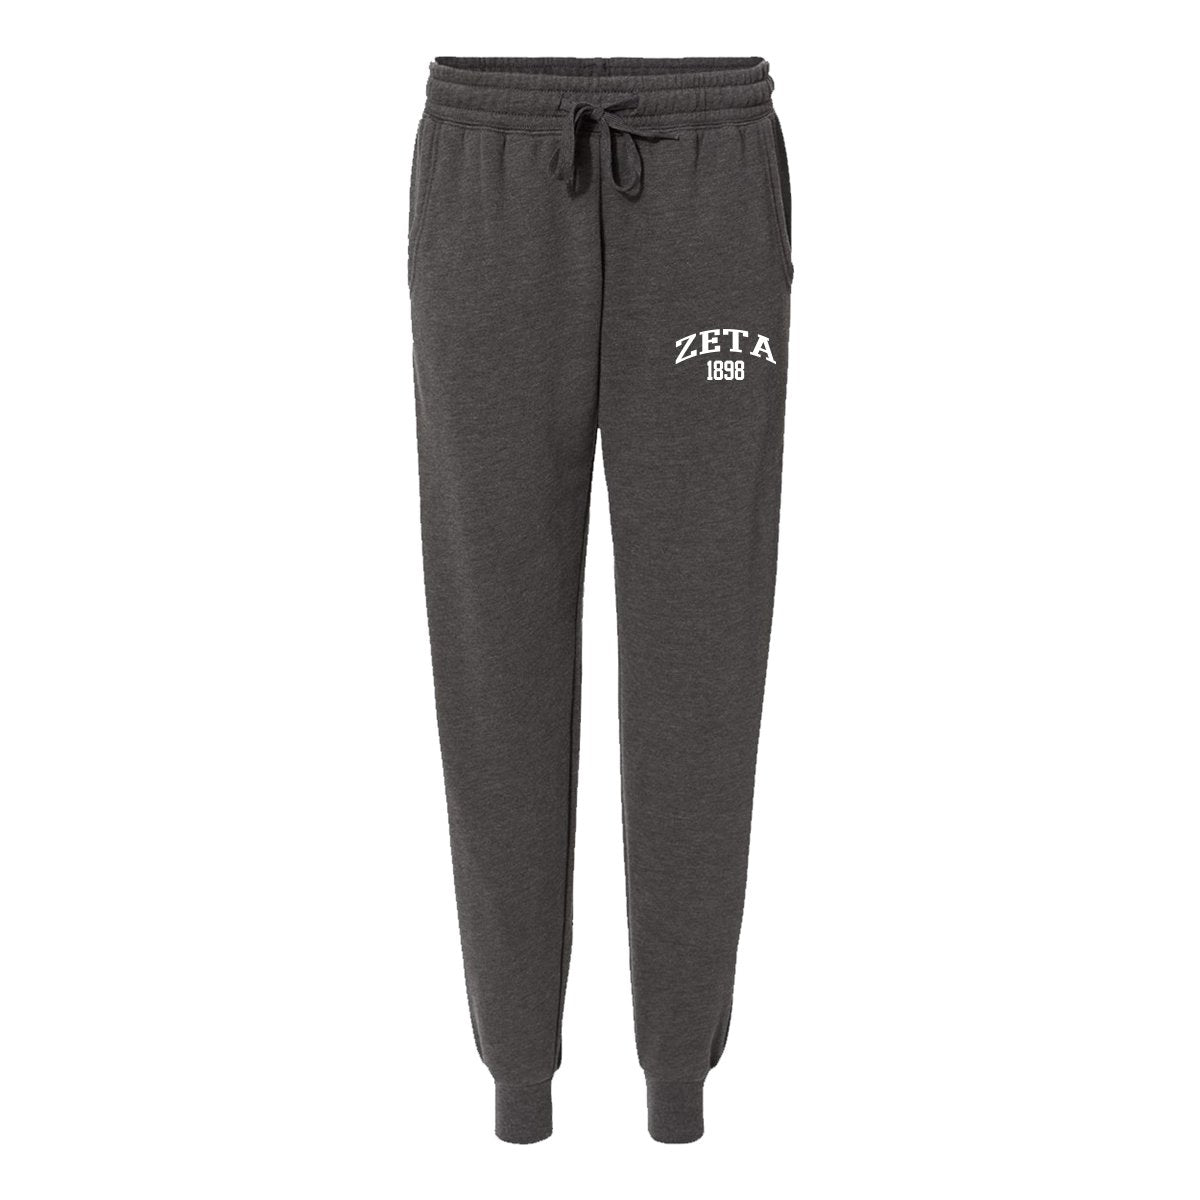 Zeta Embroidered Collegiate Joggers | Zeta Tau Alpha | Pants > Sweatpants